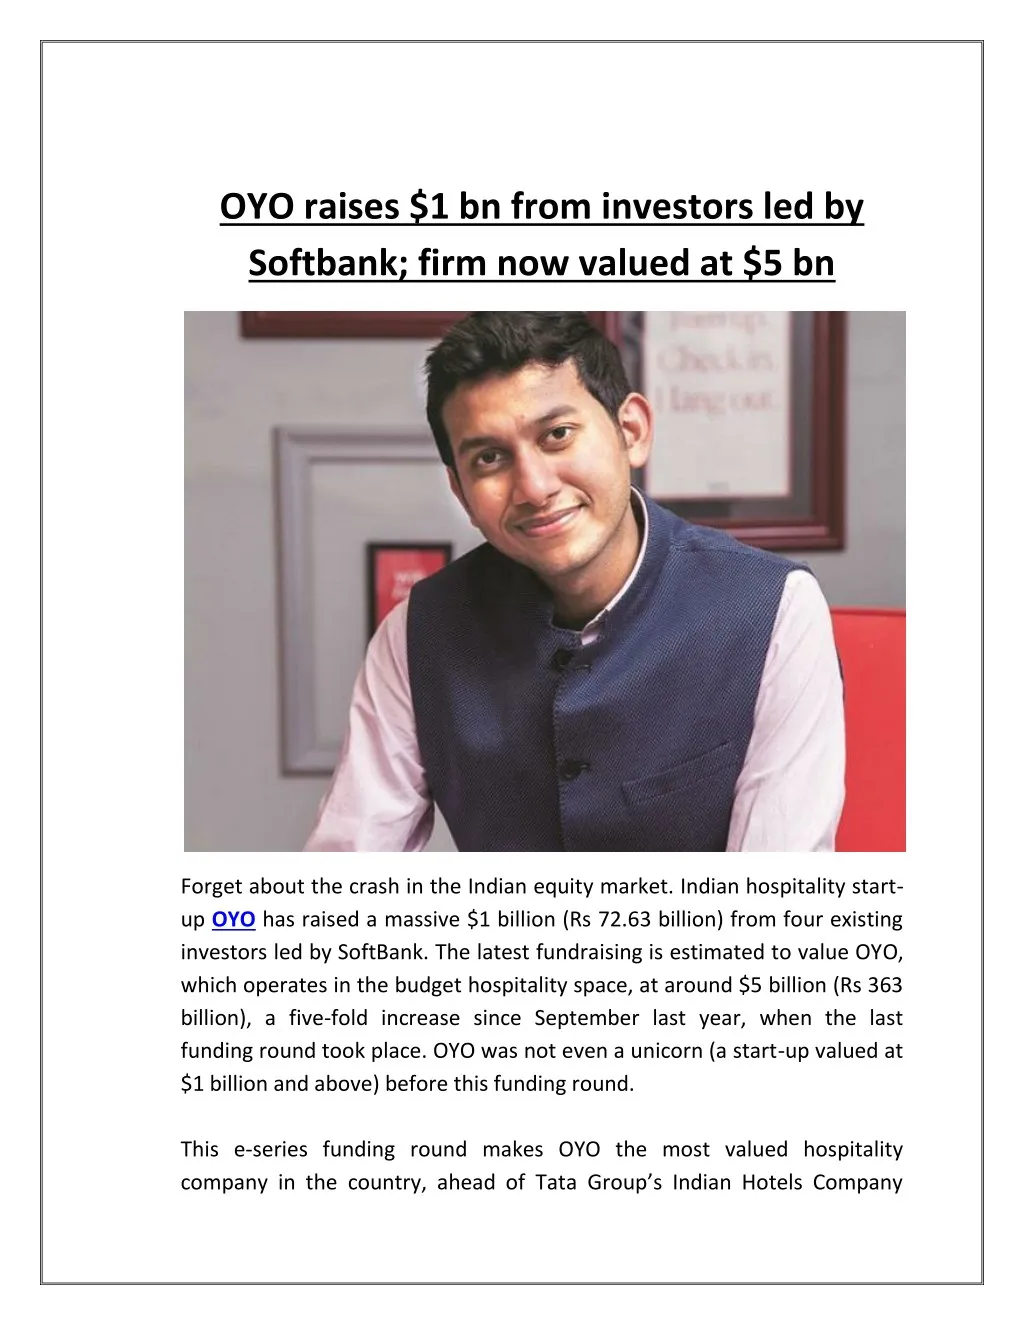 oyo raises 1 bn from investors led by softbank